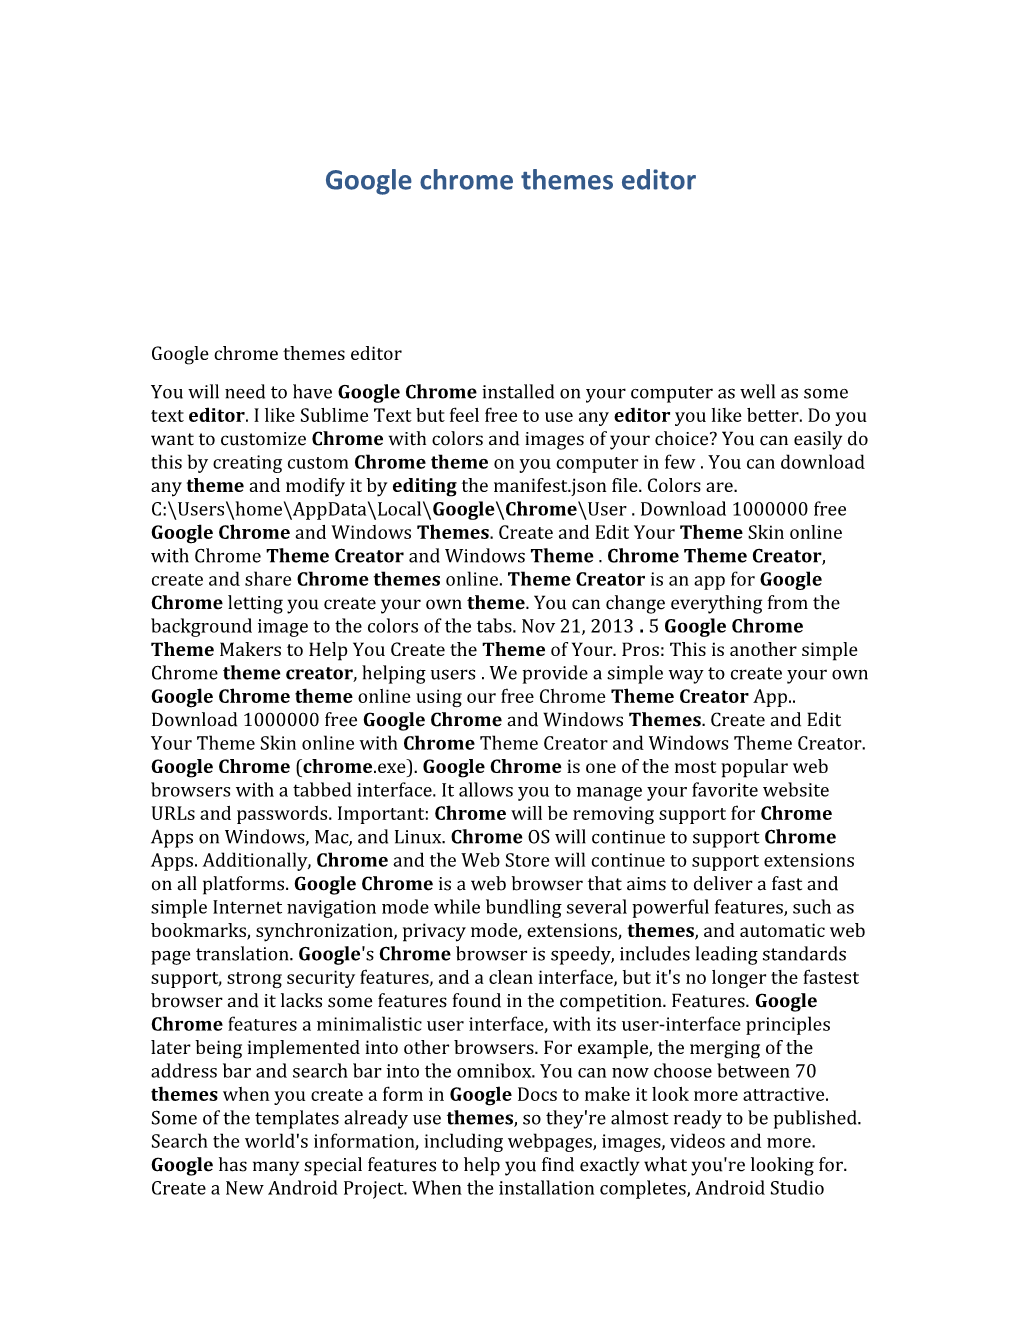 Google Chrome Themes Editor